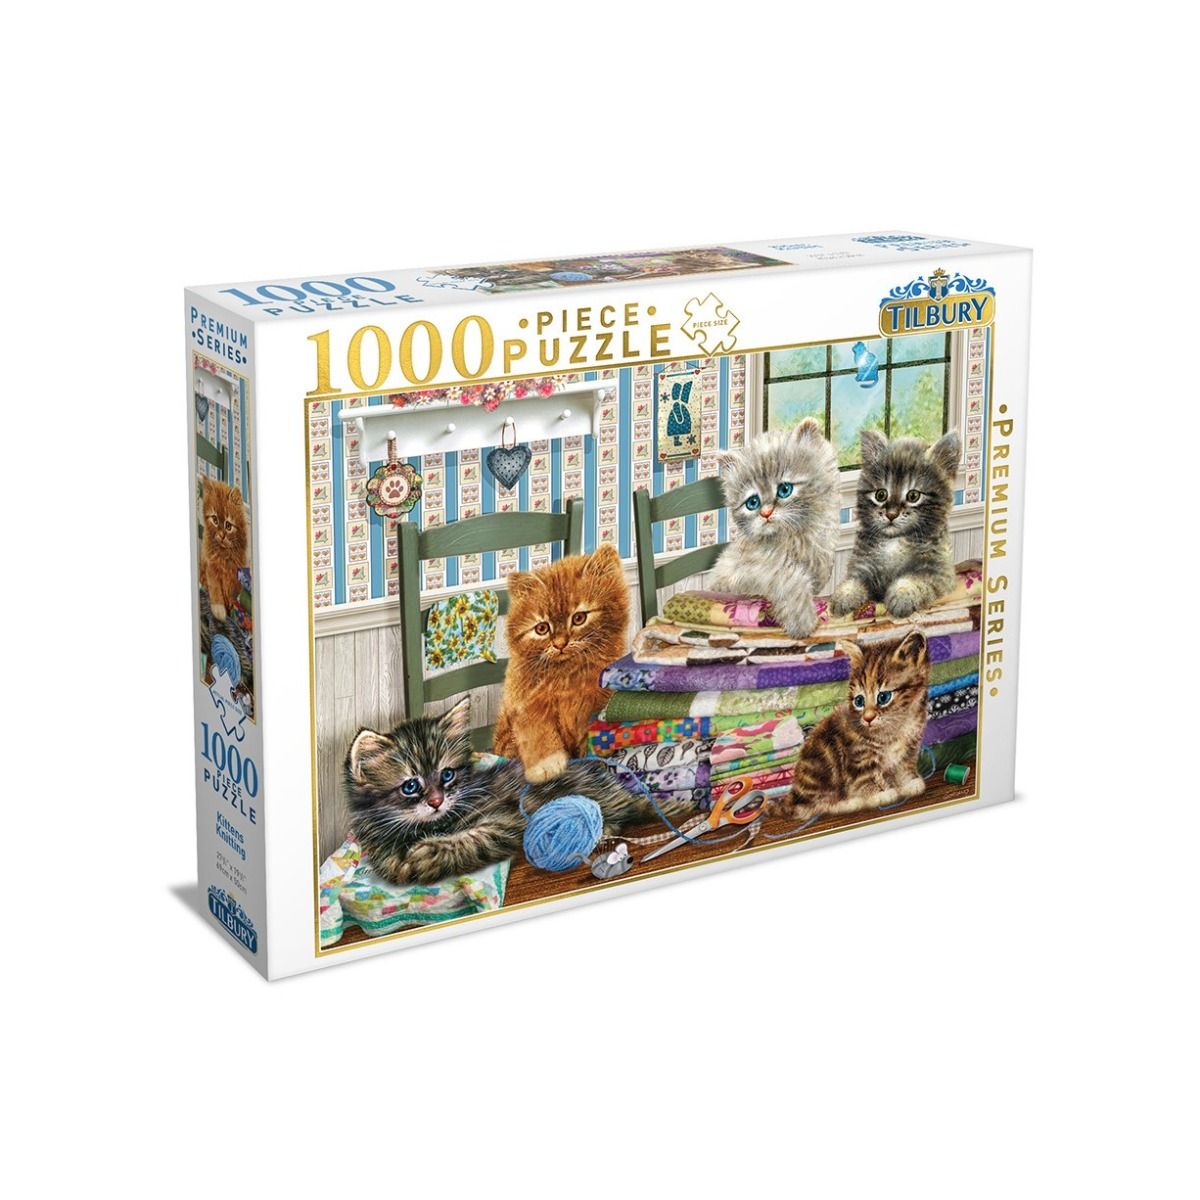 Tilbury Kittens Knitting Puzzle 1000pc